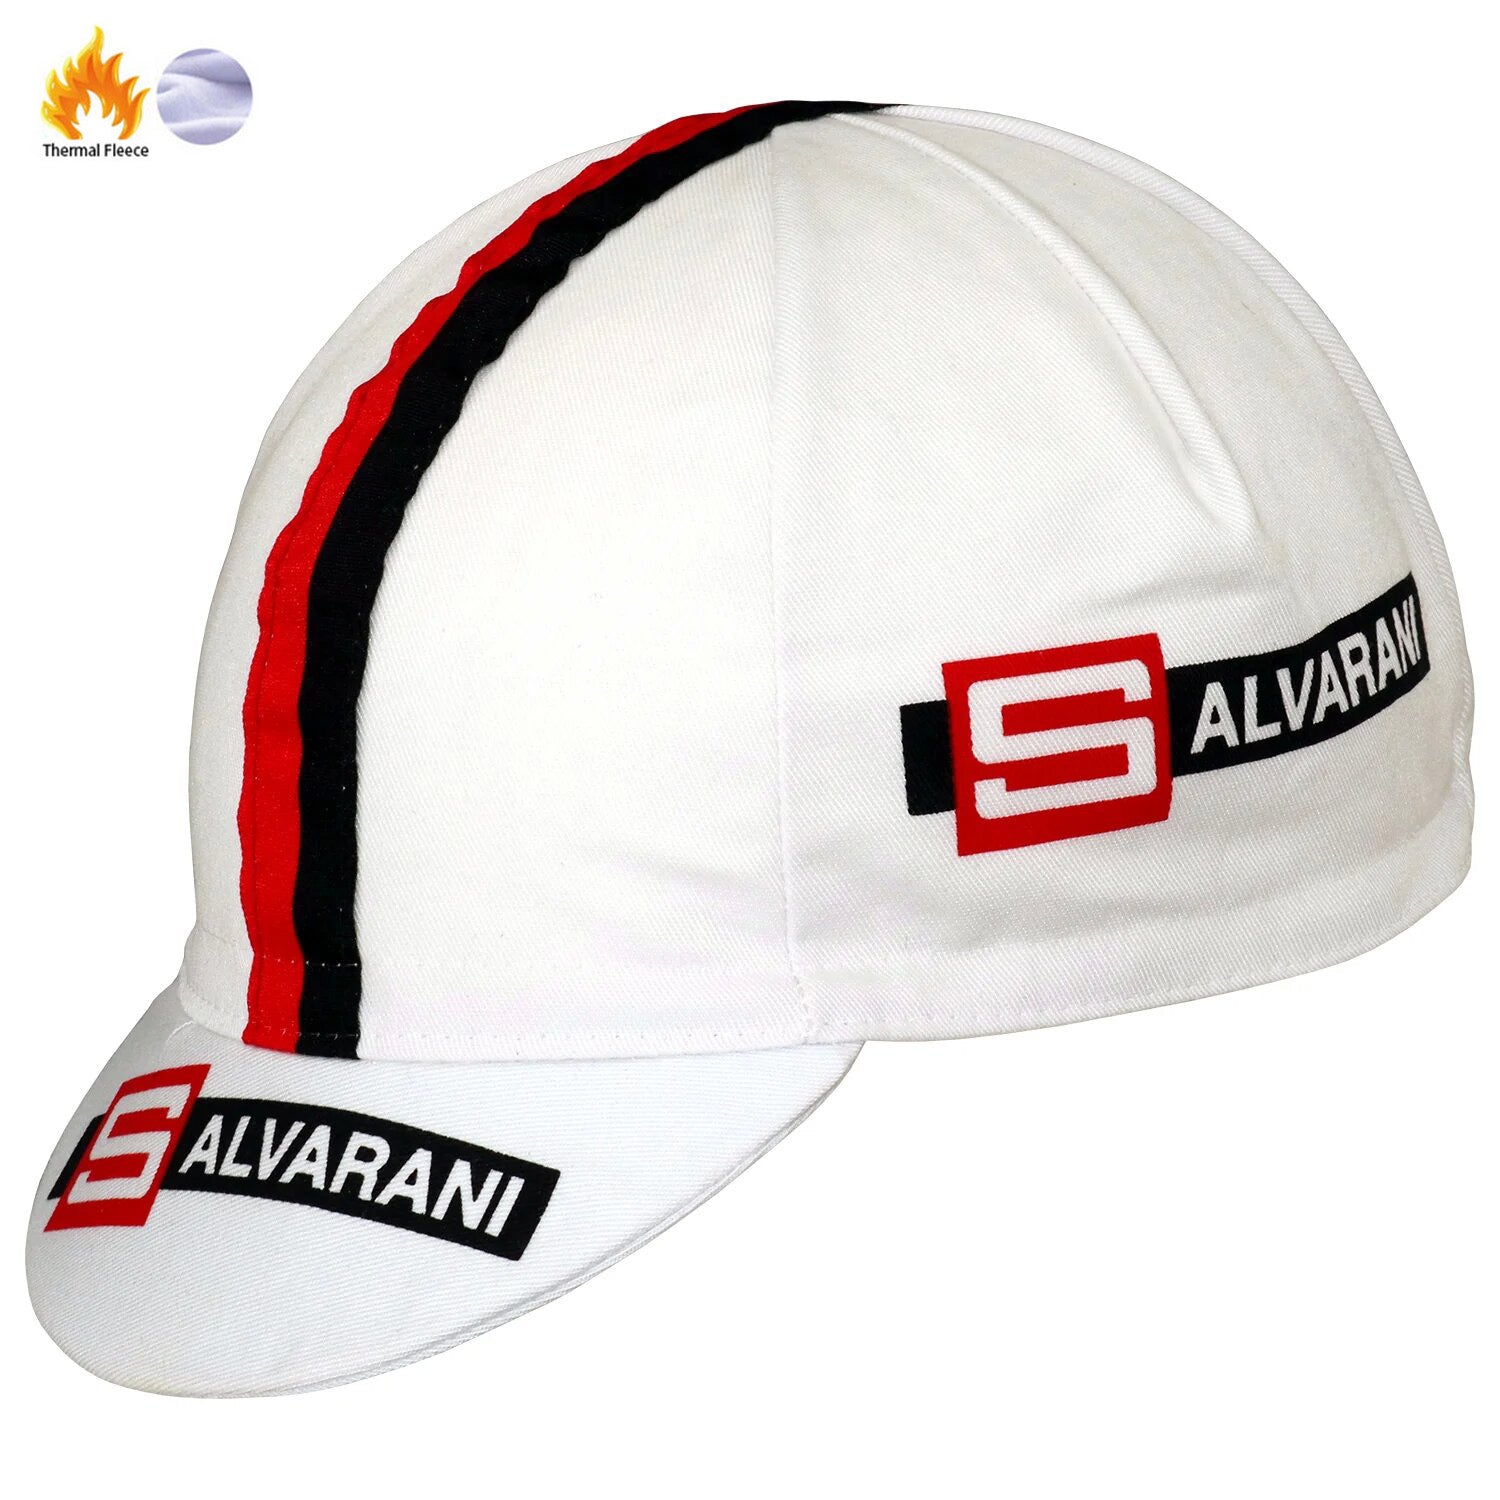 Salvarani Retro Cycling Cap